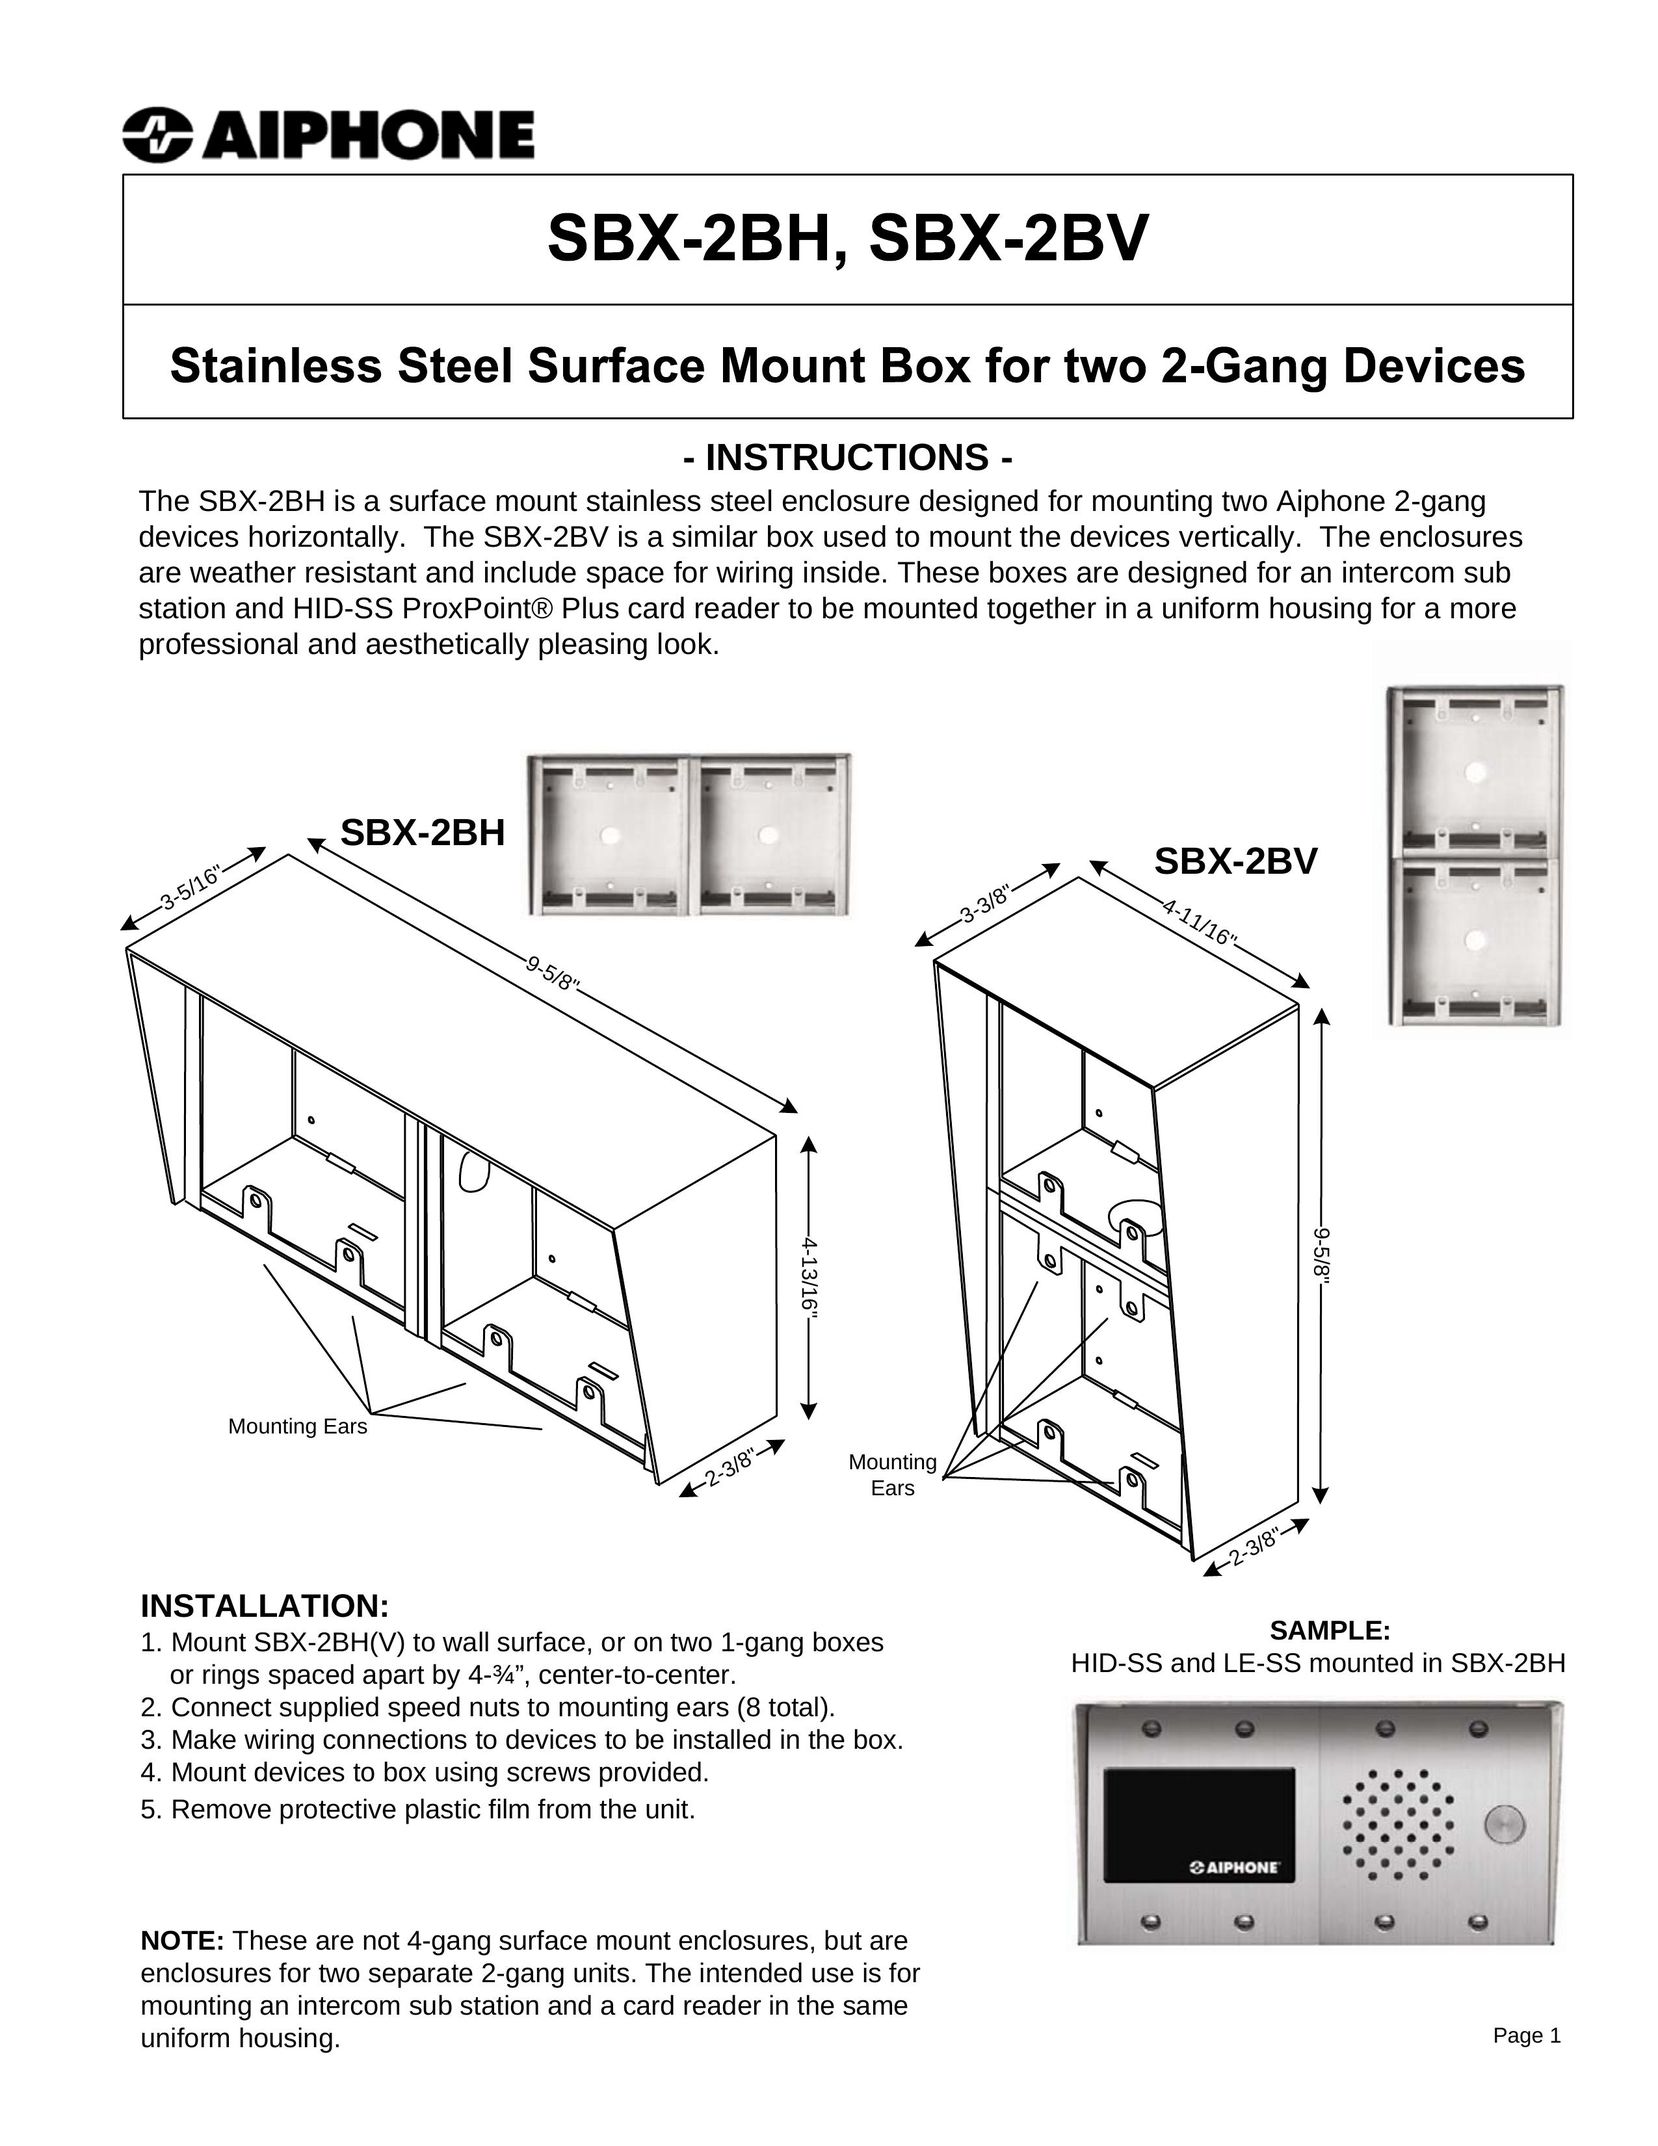 Aiphone SBX-2BH TV Mount User Manual